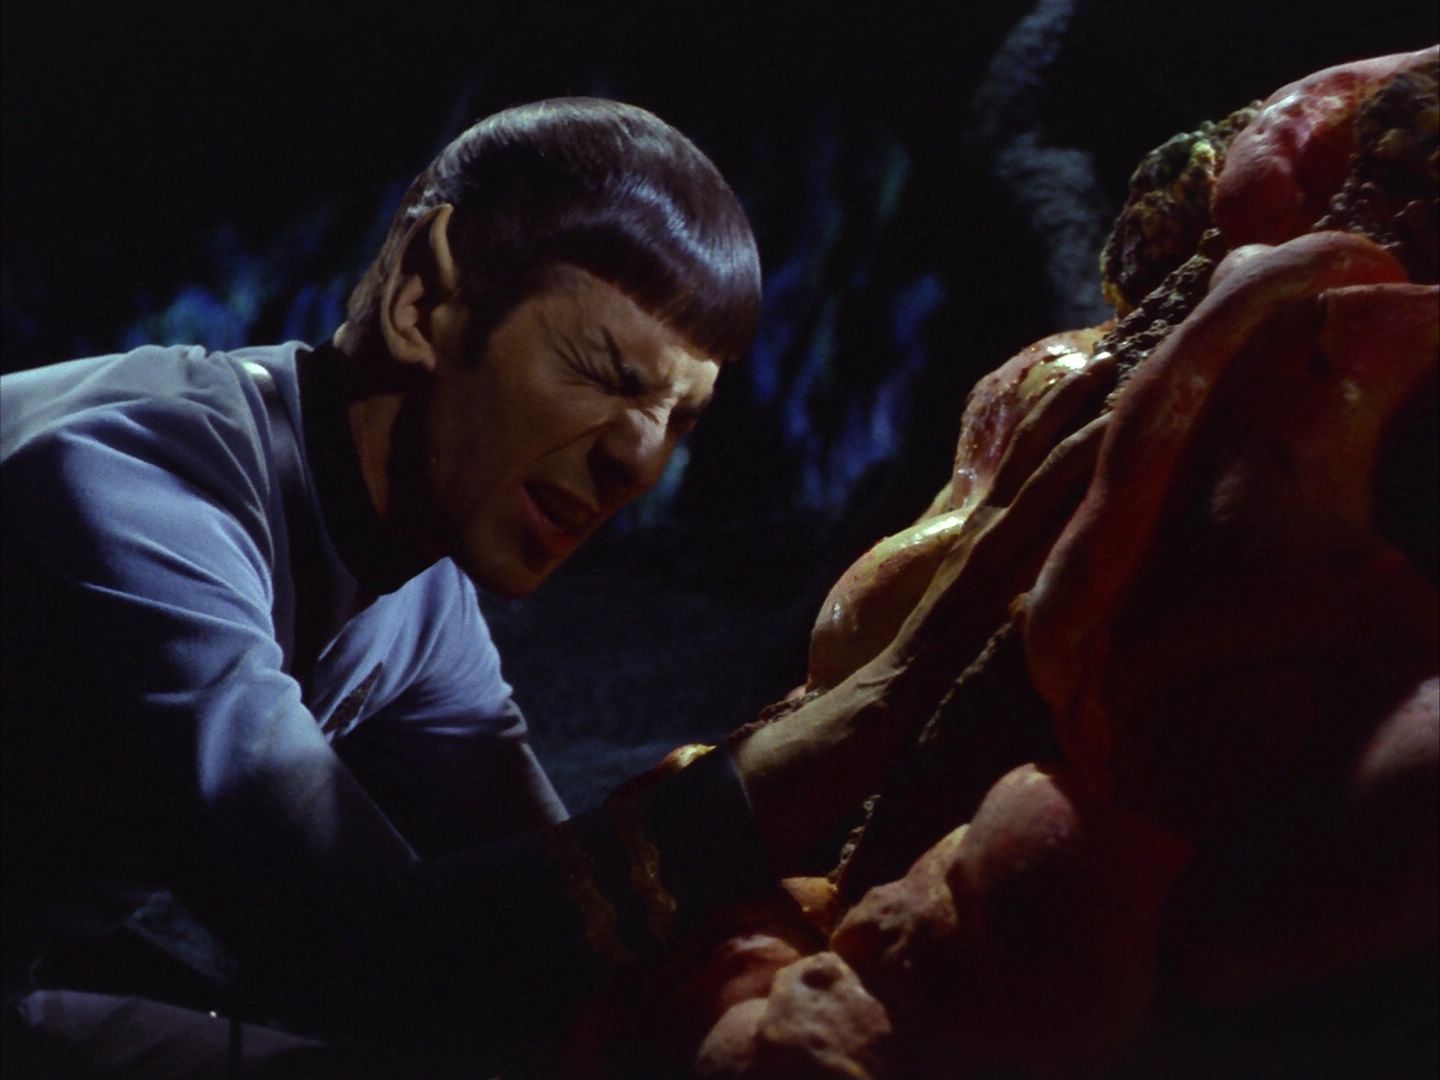 The Devil In The Dark" (S1:E25) Star Trek: The Original Series Episode  Summary